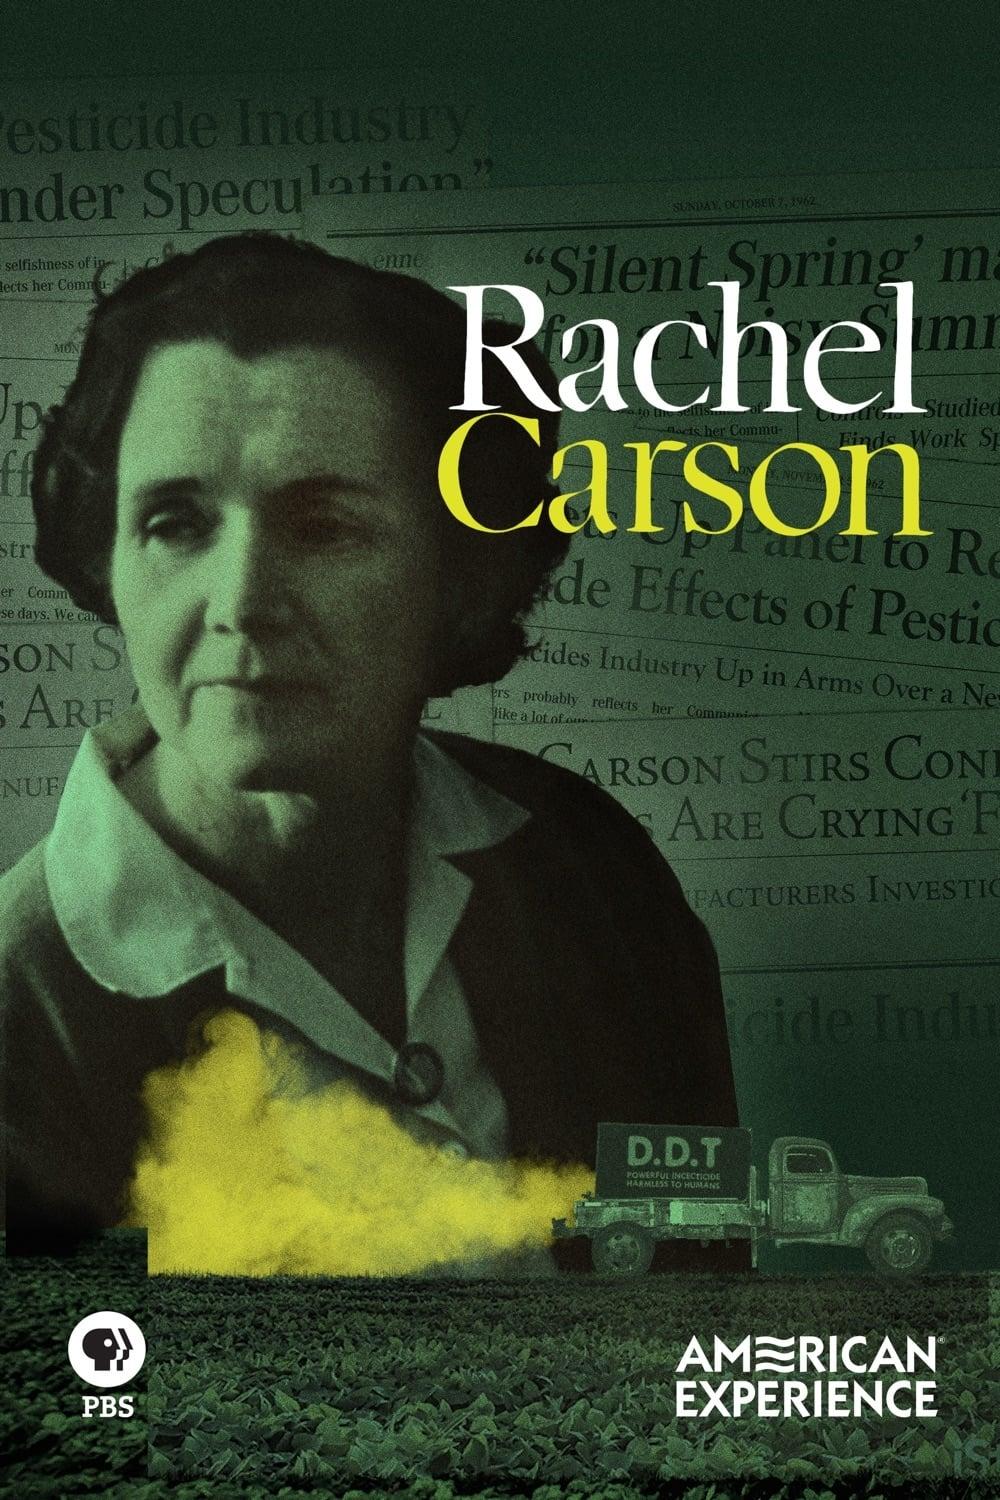 Rachel Carson poster